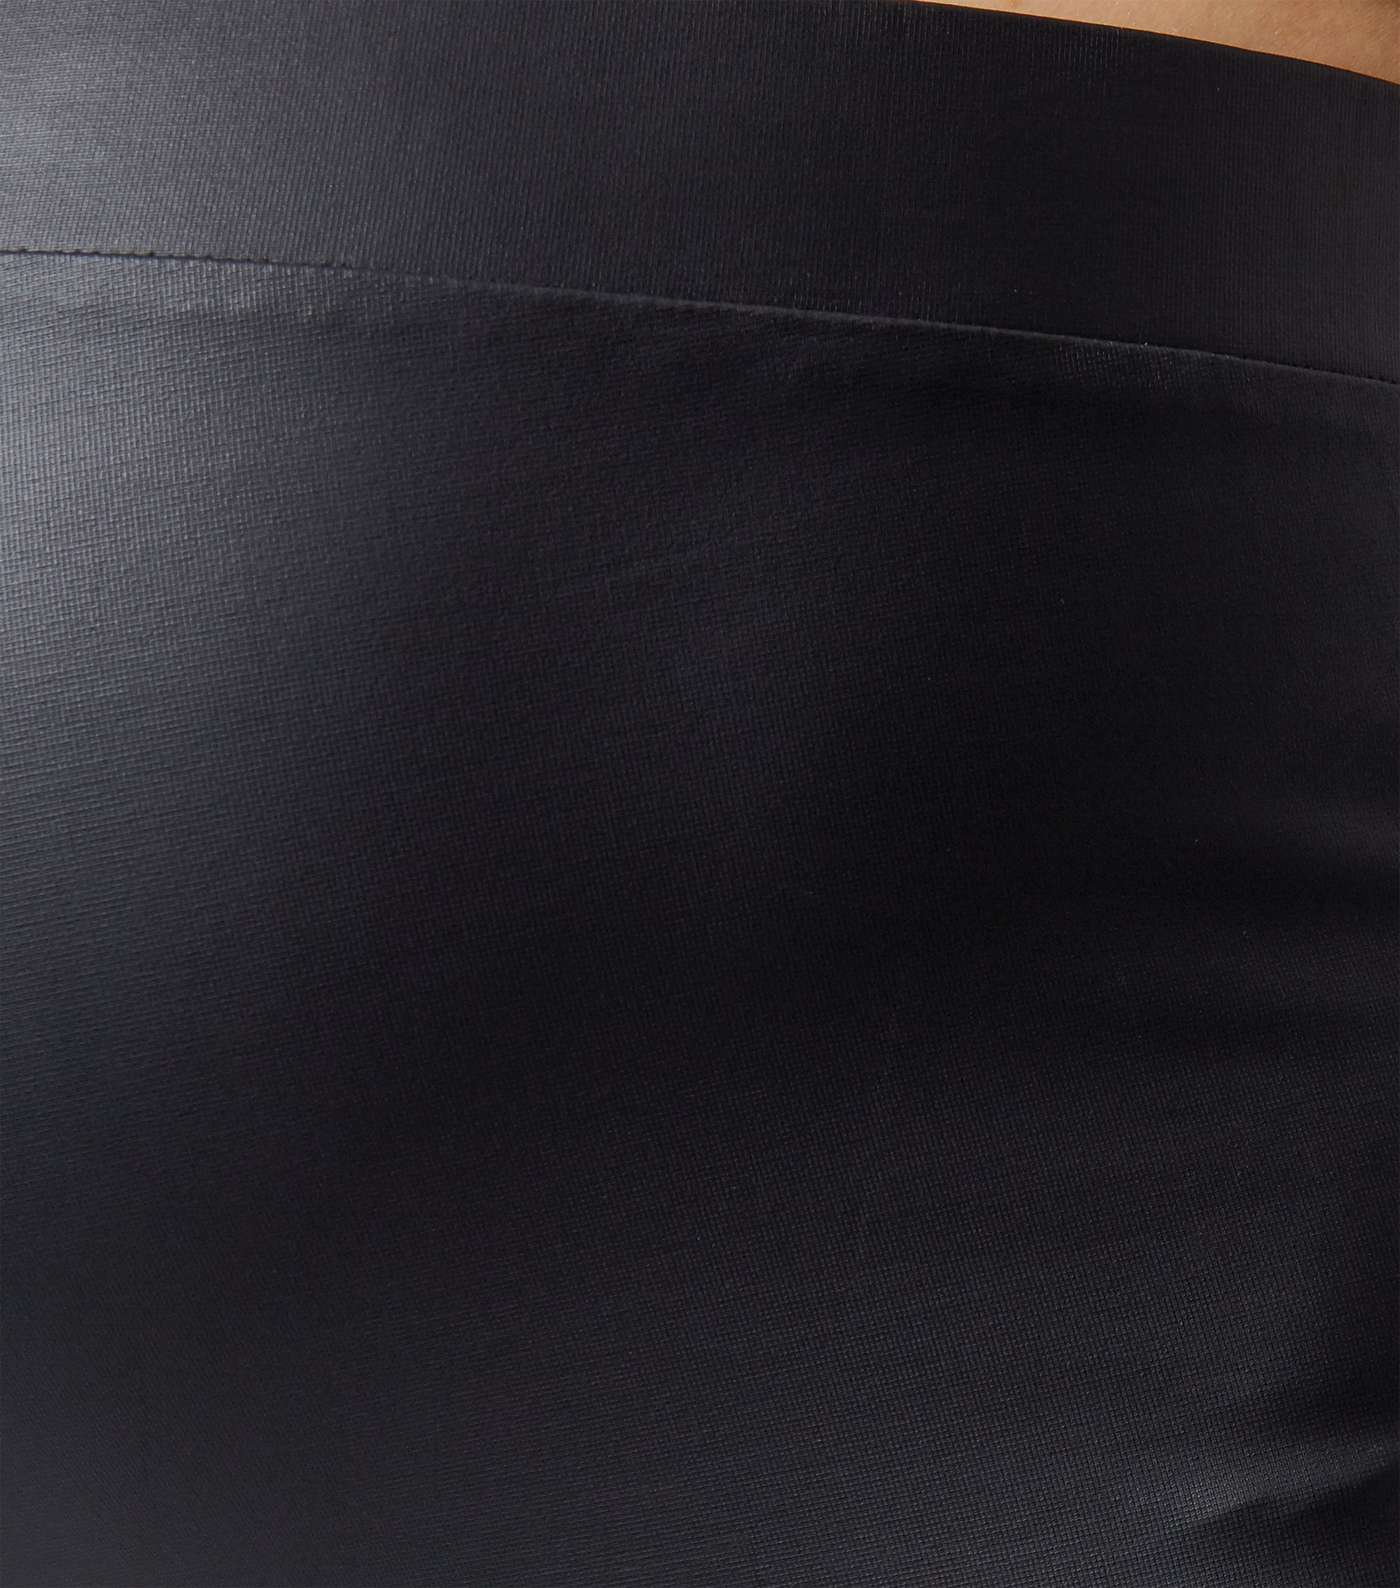 Maternity Black Leather-Look Leggings Image 5